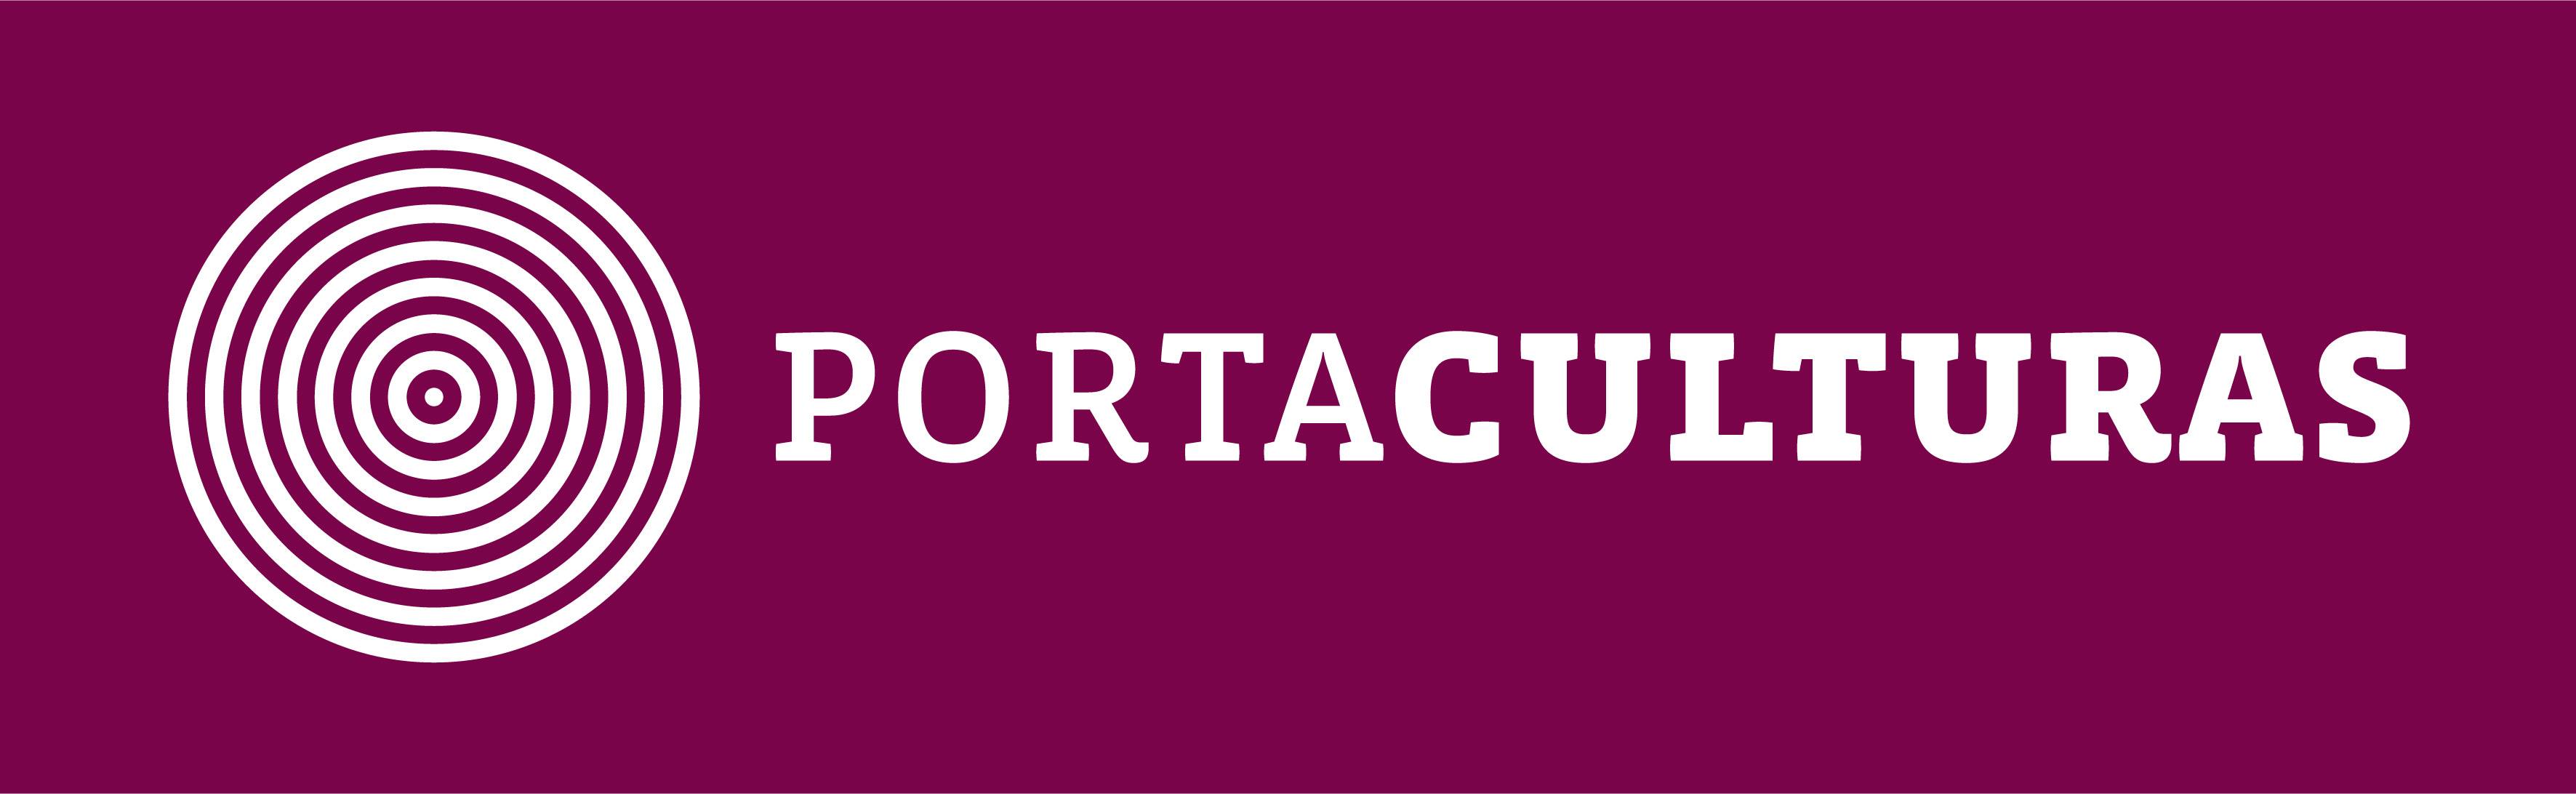 Editorial Portaculturas